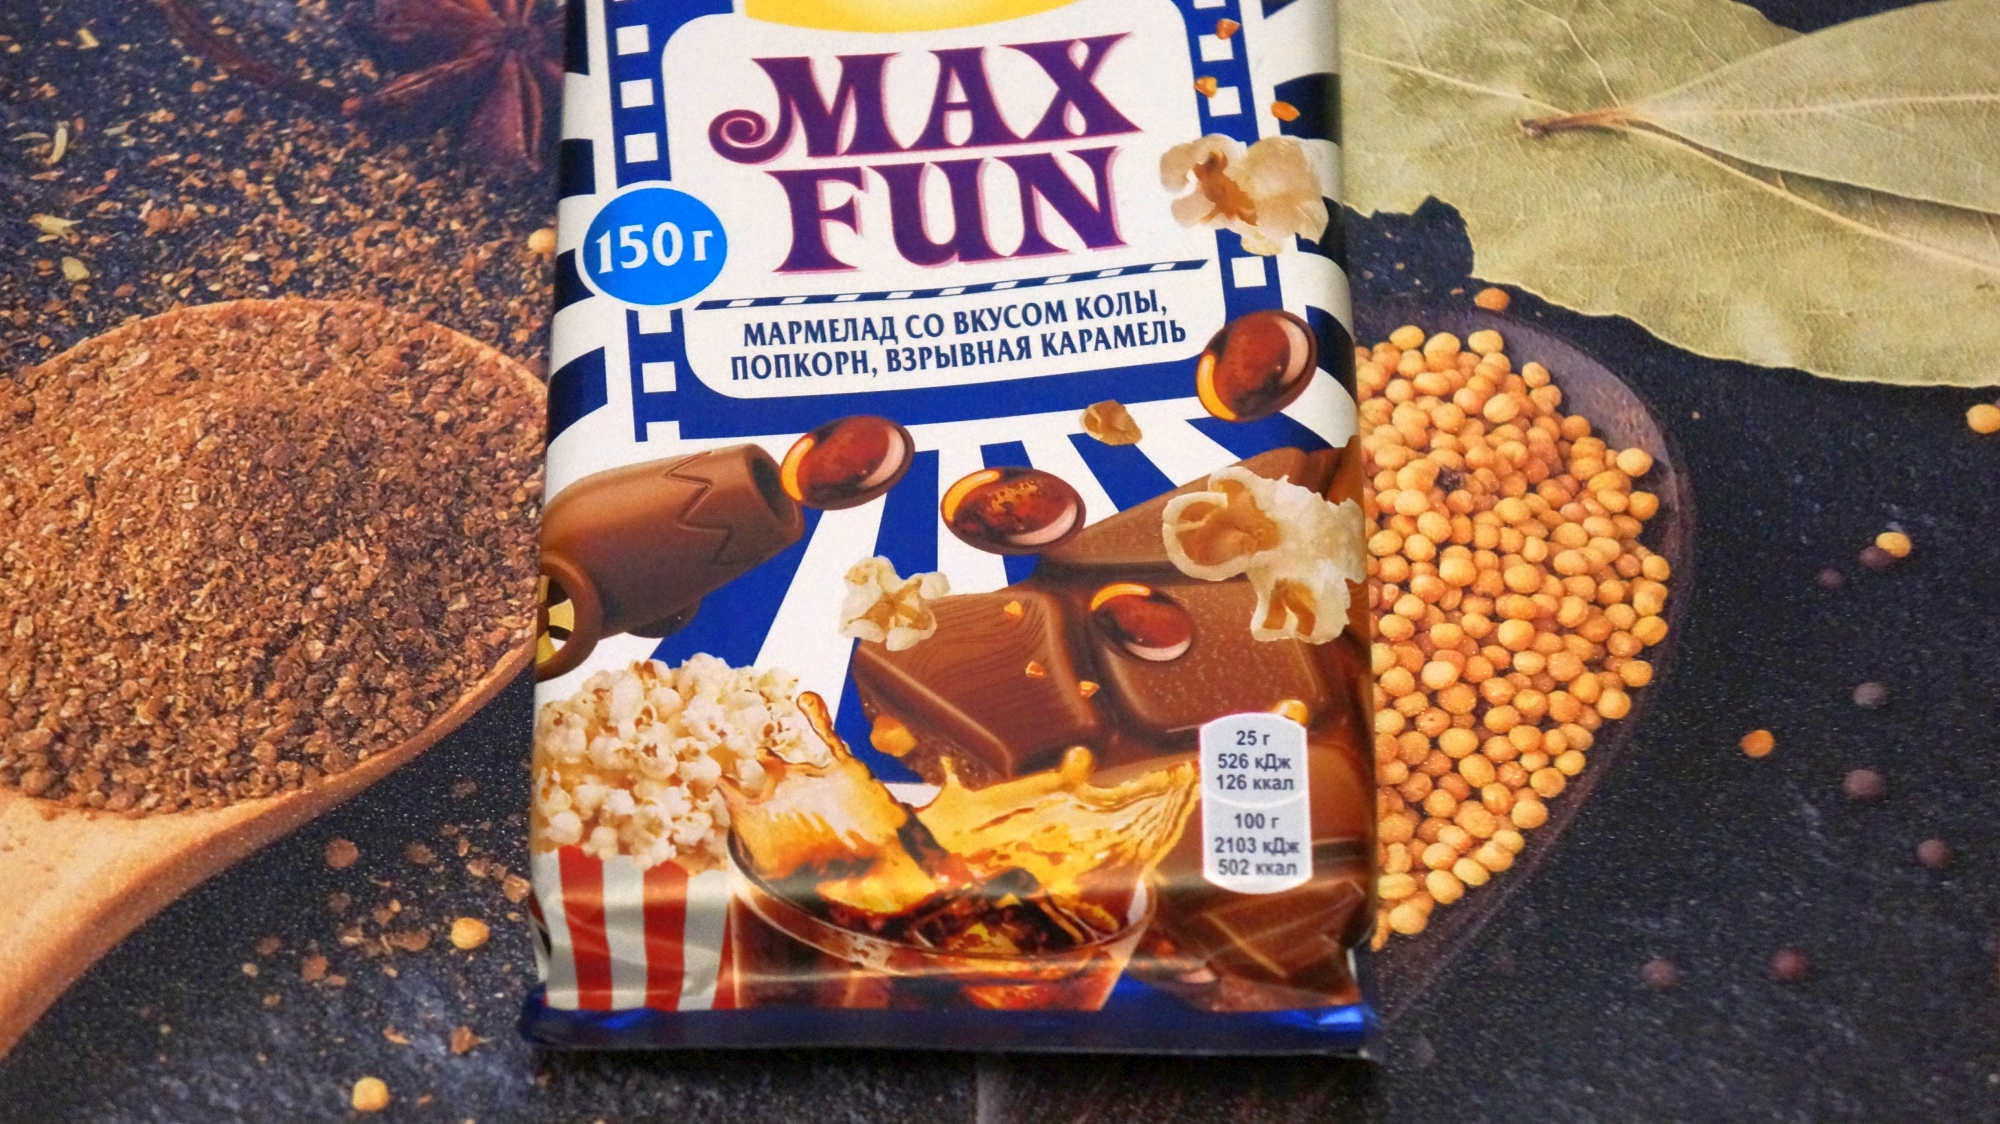 Шоколад Alpen Gold Max Fun Мармелад со вкусом колы, попкорн, взрывная карамель